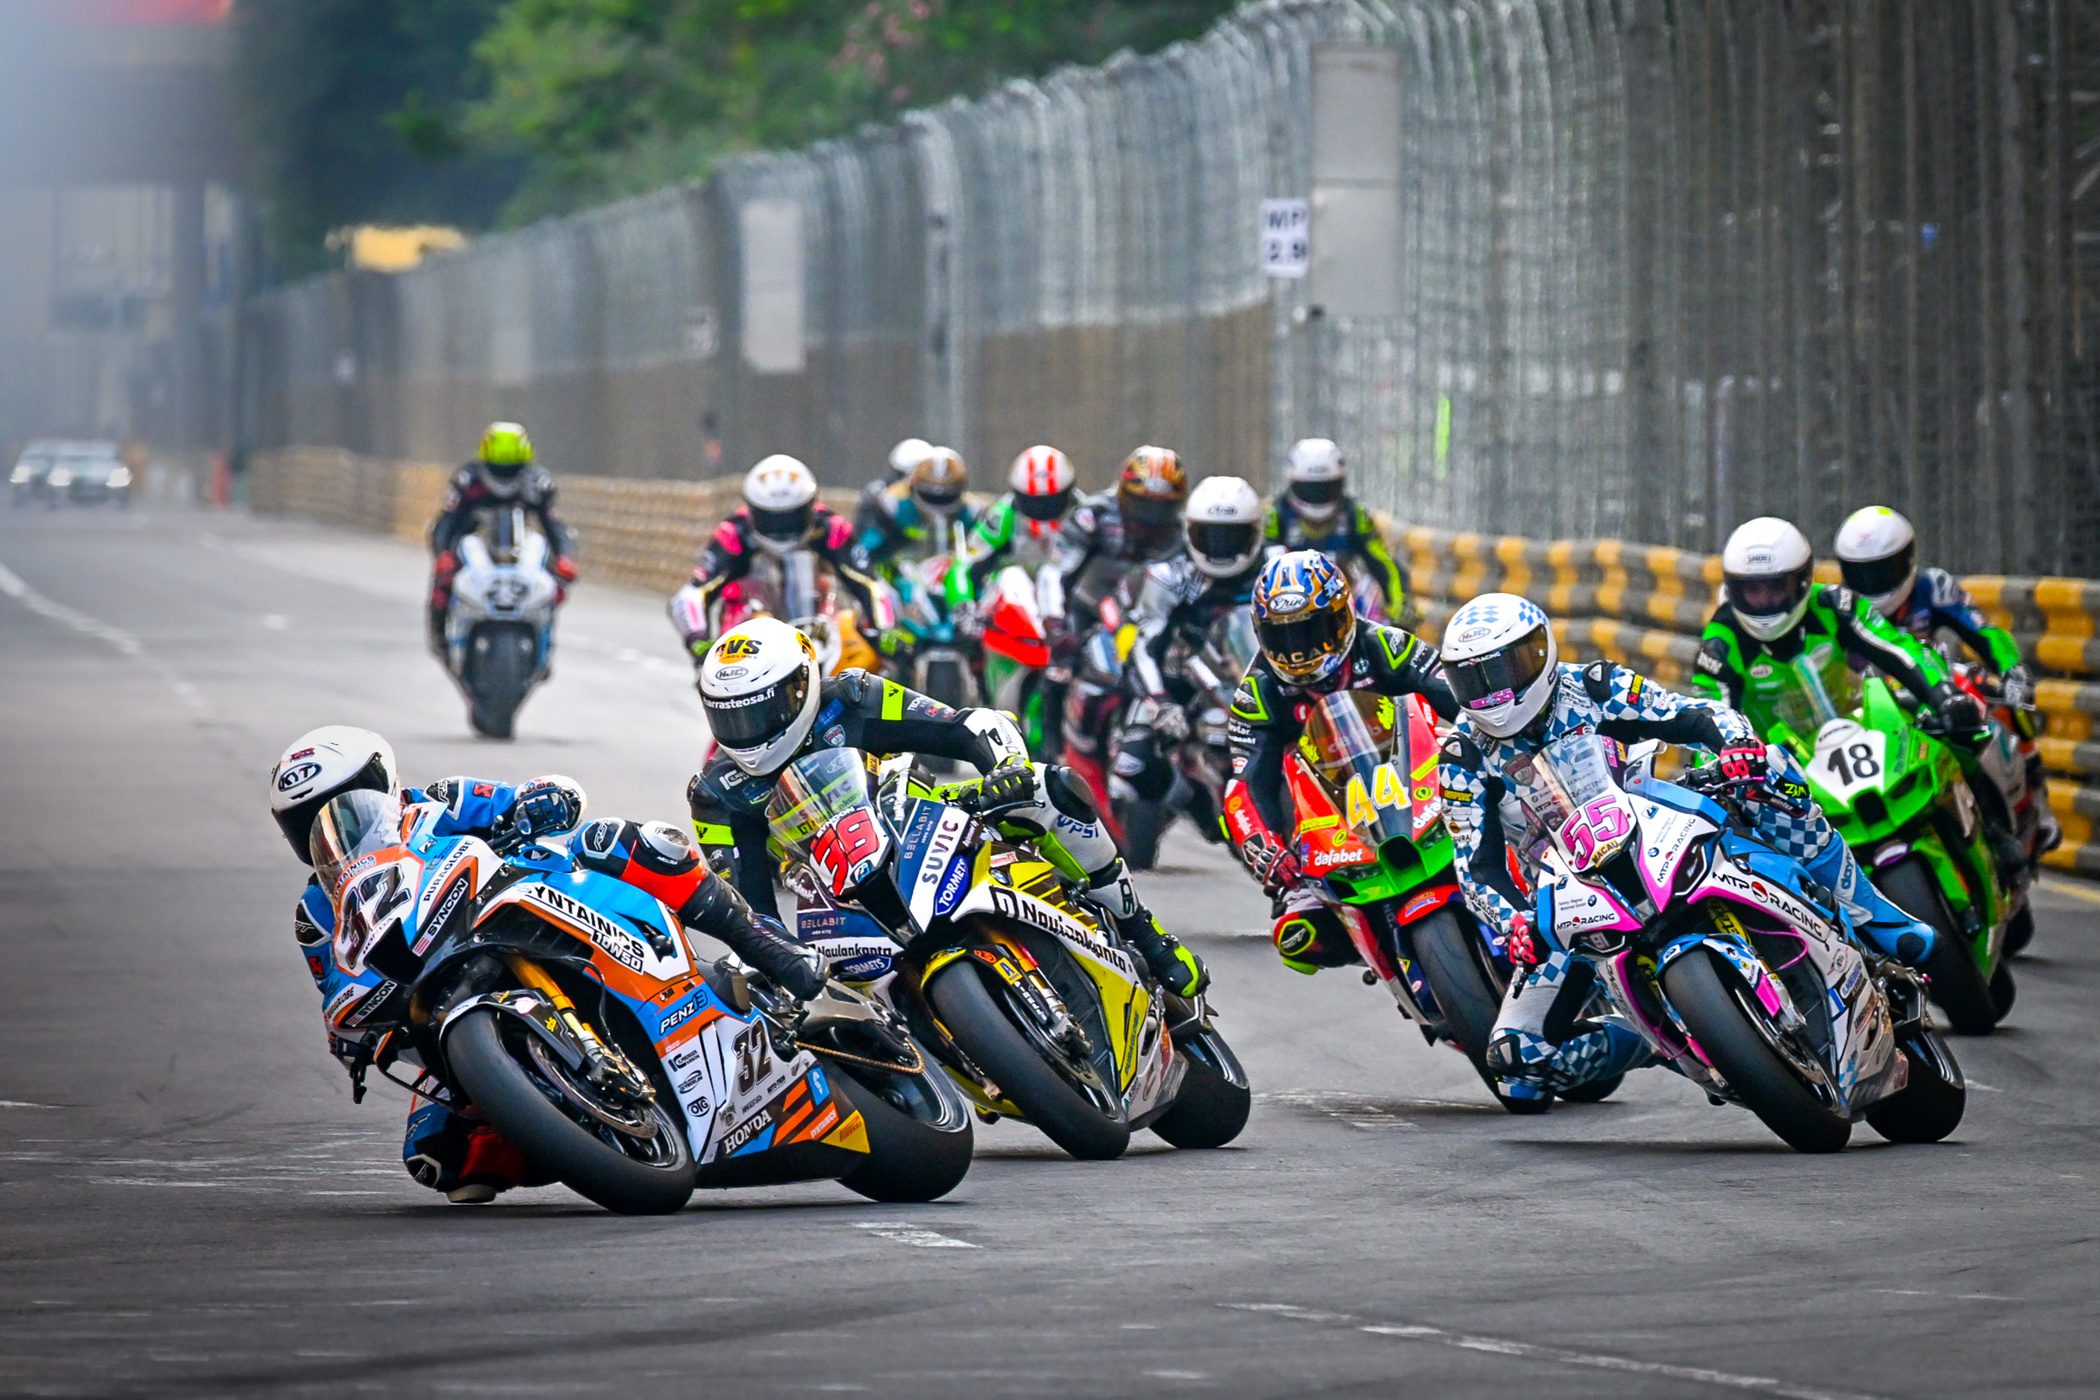 motorcycles racing at the guia circuit